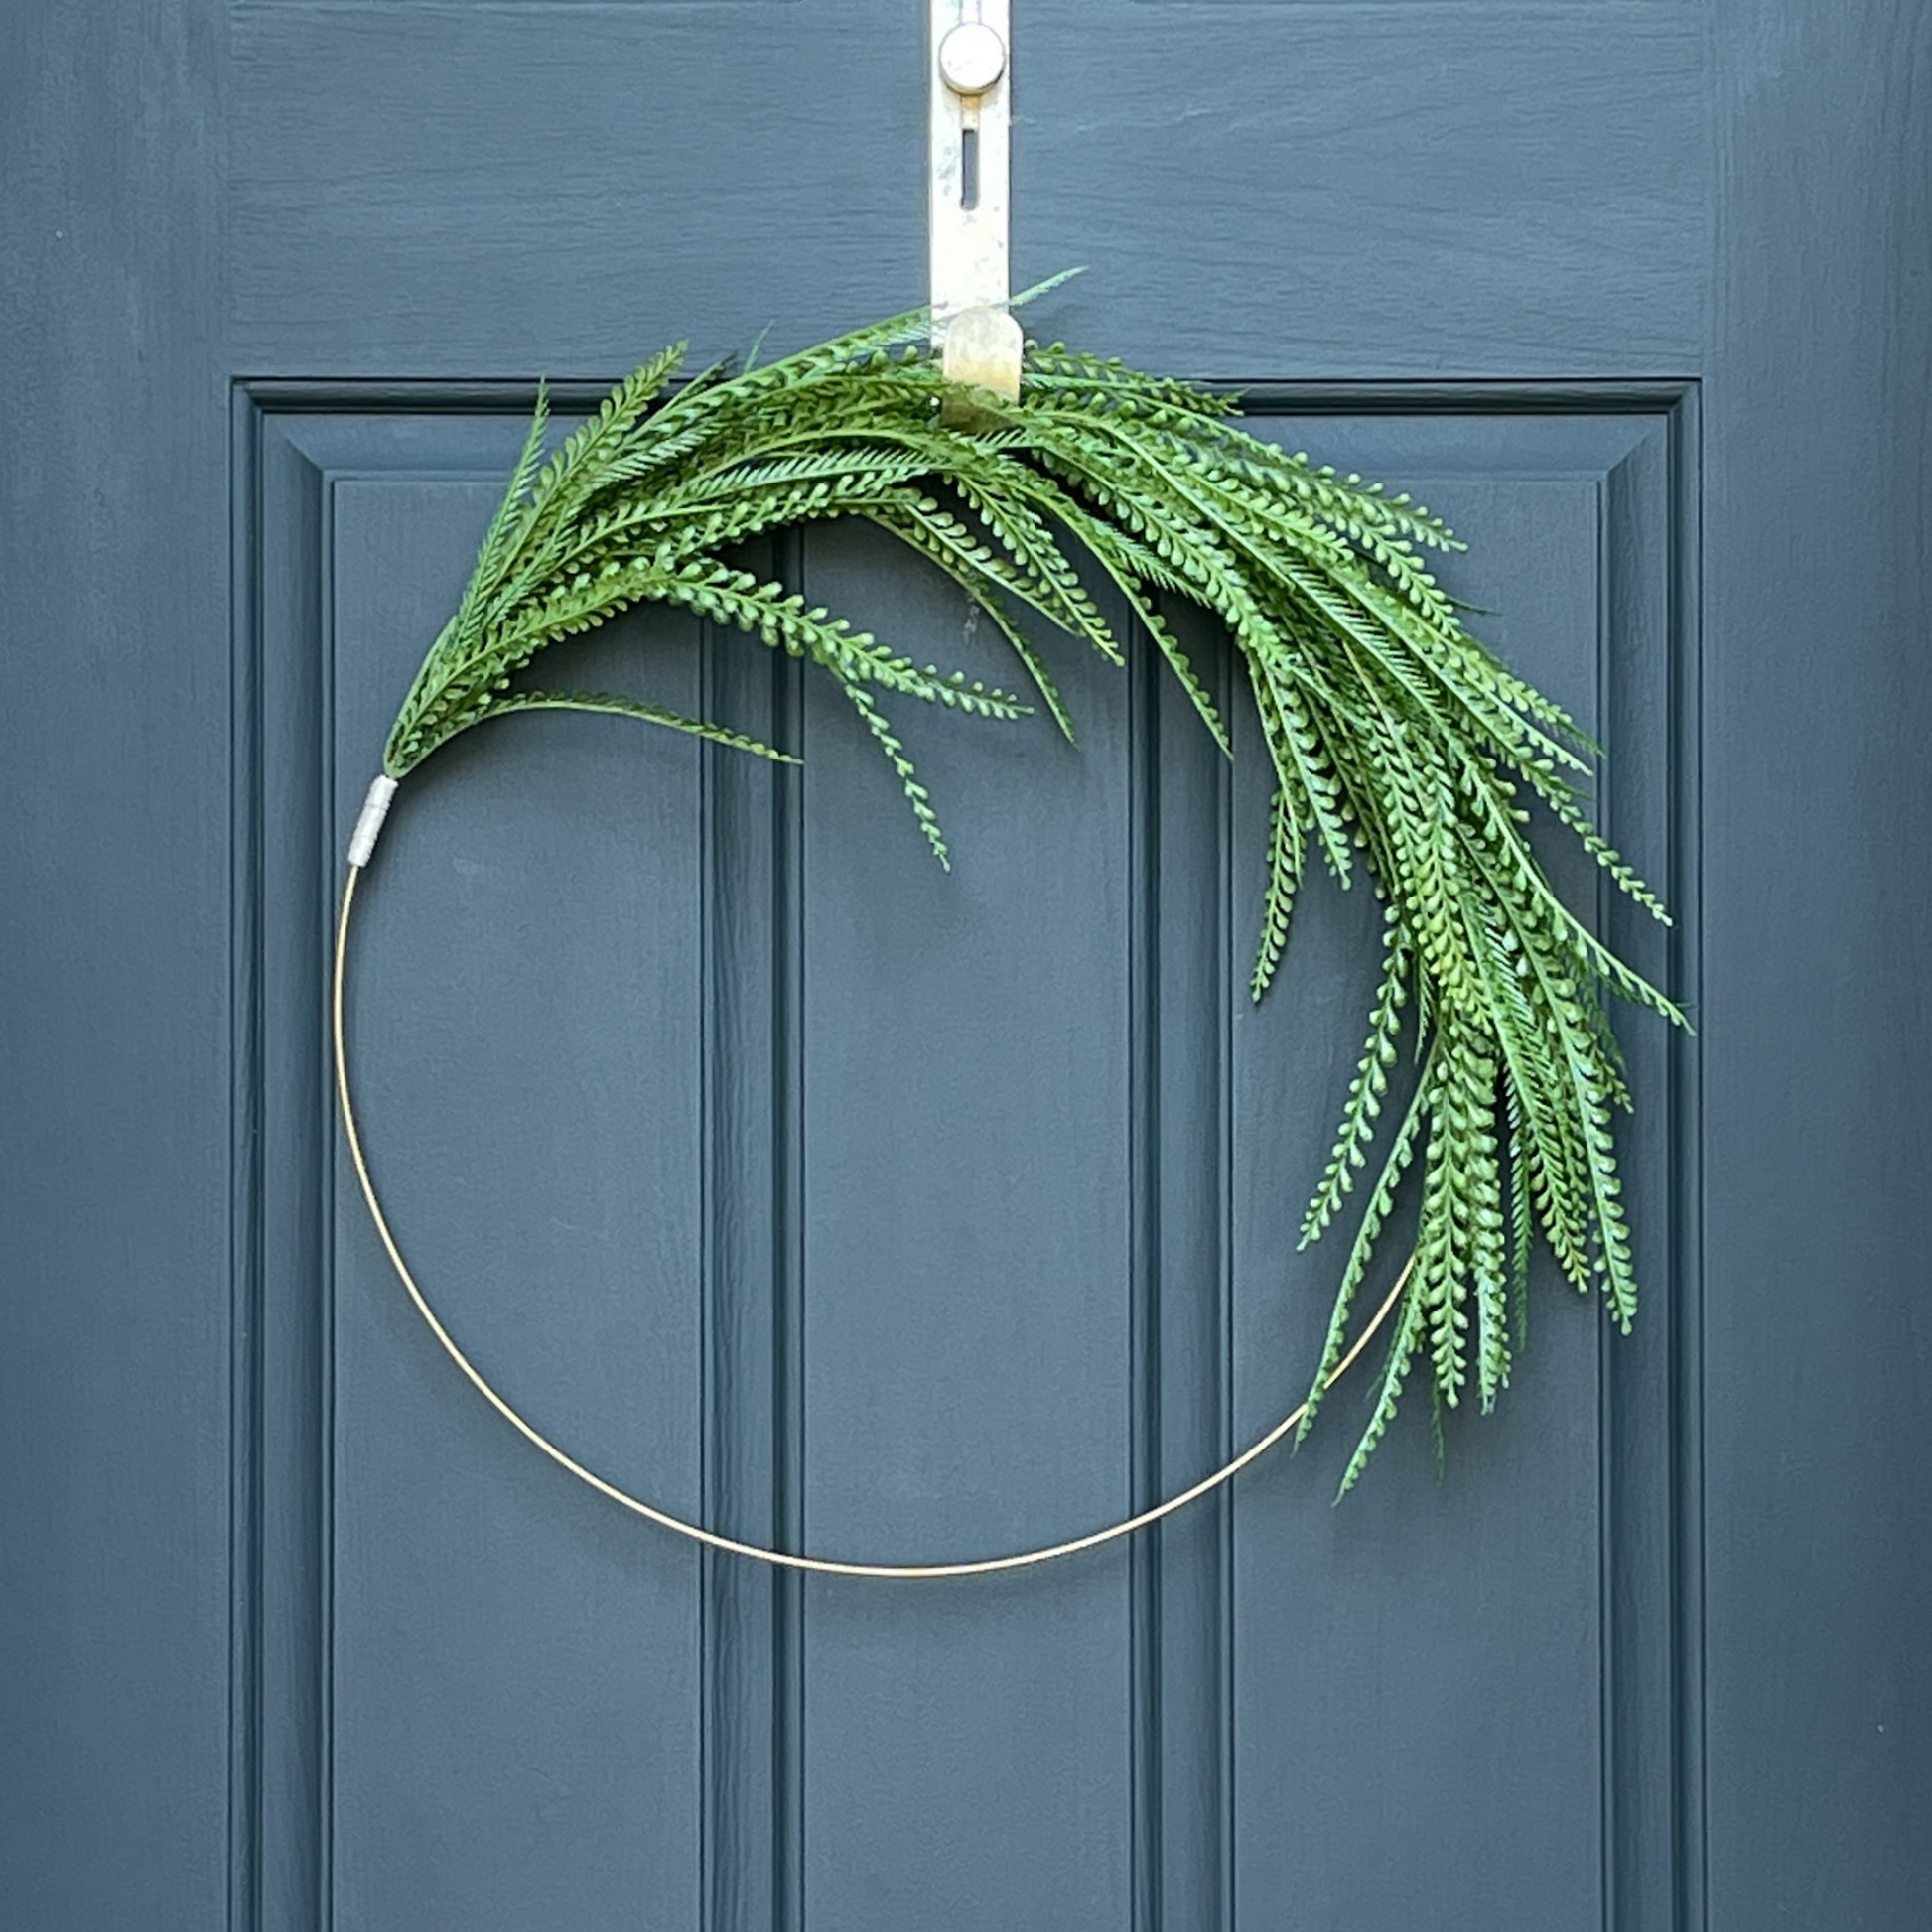 24" asymmetrical wreath, featuing green fern-like leaves, hanging from a gold wreath hanger on a dark blue door. 